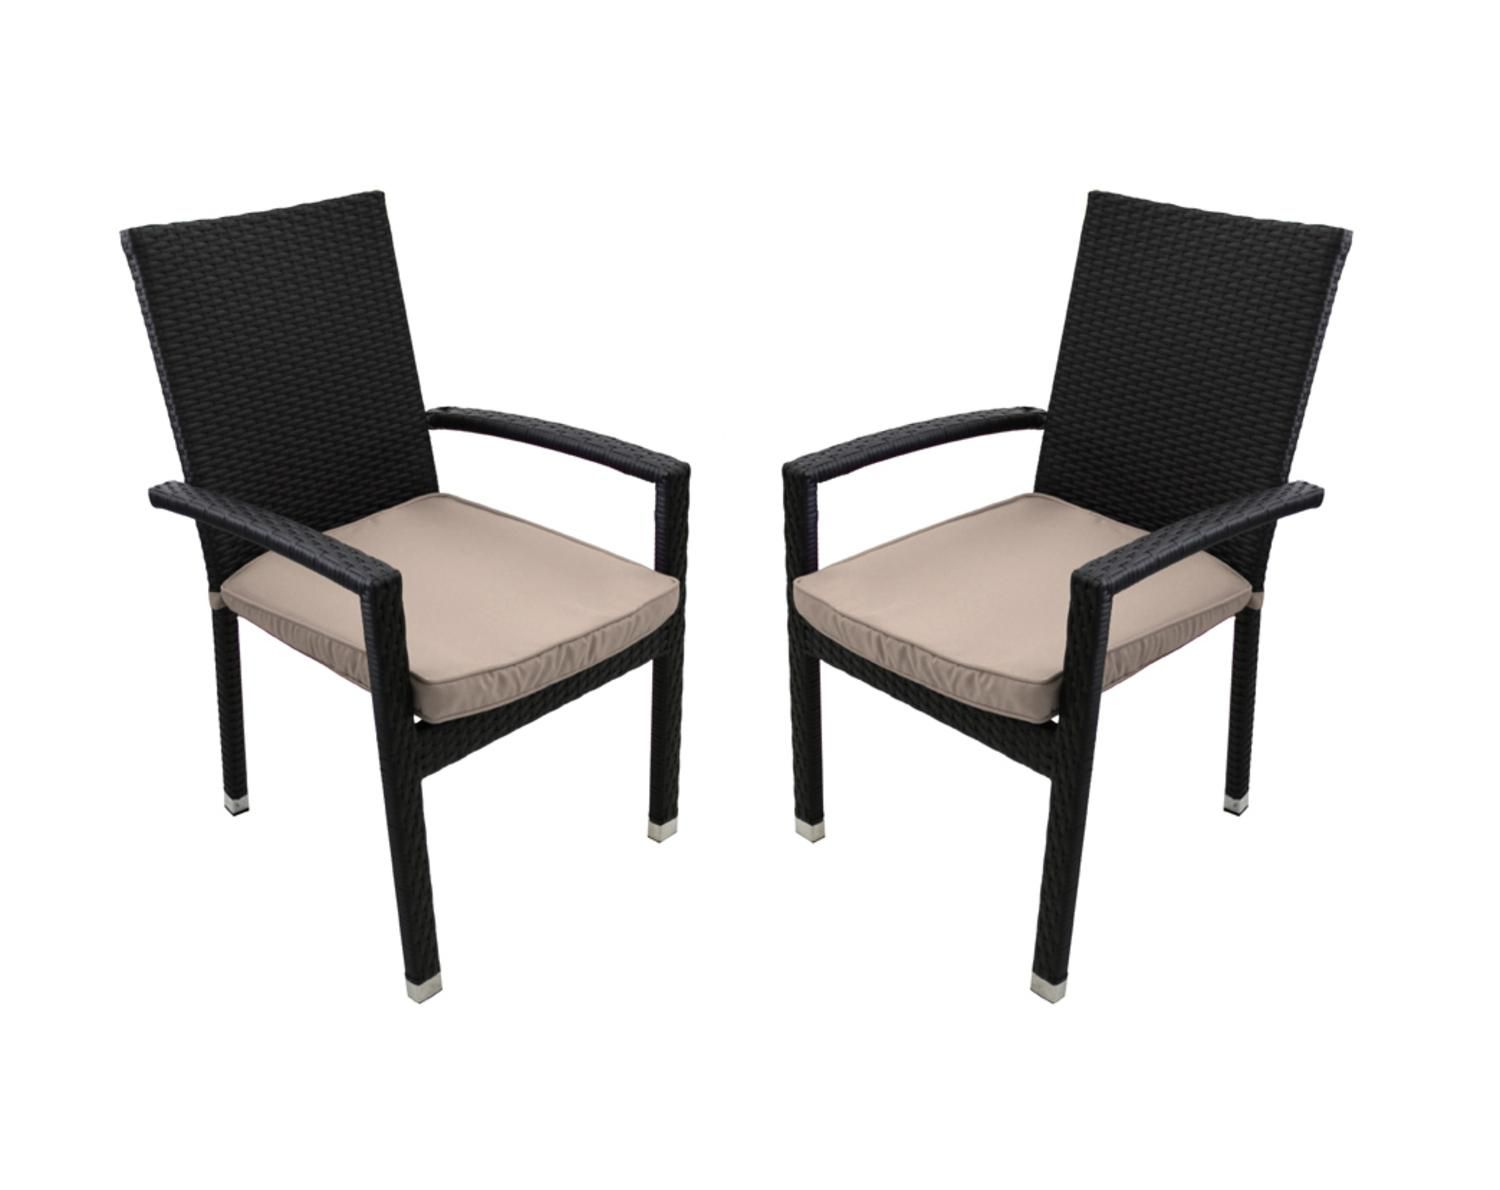 Set Of 2 Black Resin Wicker Outdoor Patio Furniture Dining Chairs With Black Outdoor Dining Chairs (View 12 of 15)